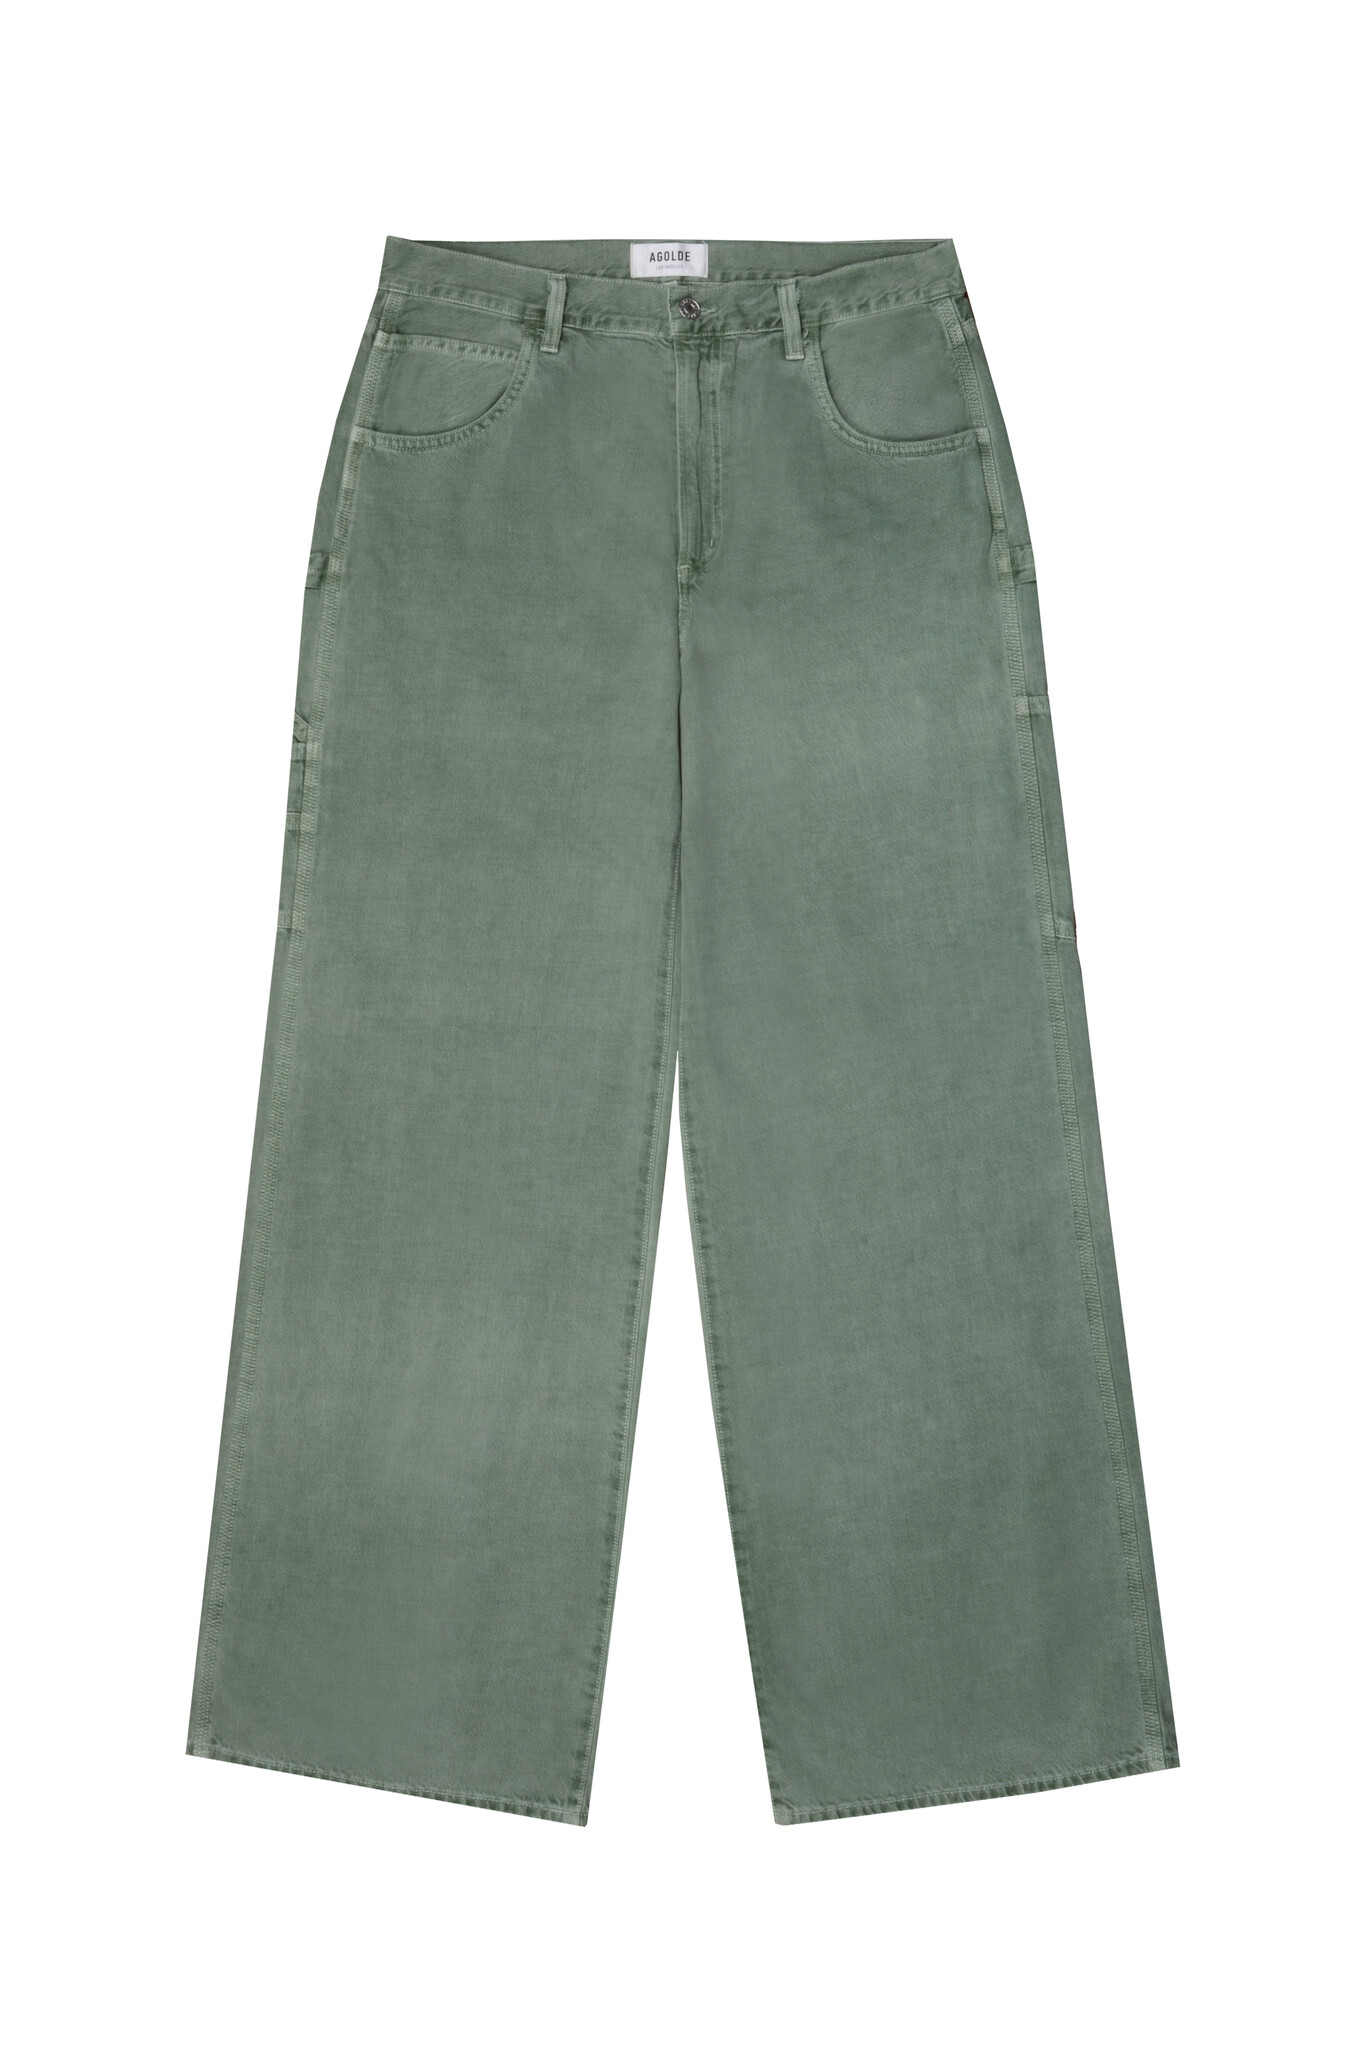 Pants Men - Kilwa - Dark Green | Fair Fashion by TWOTHIRDS